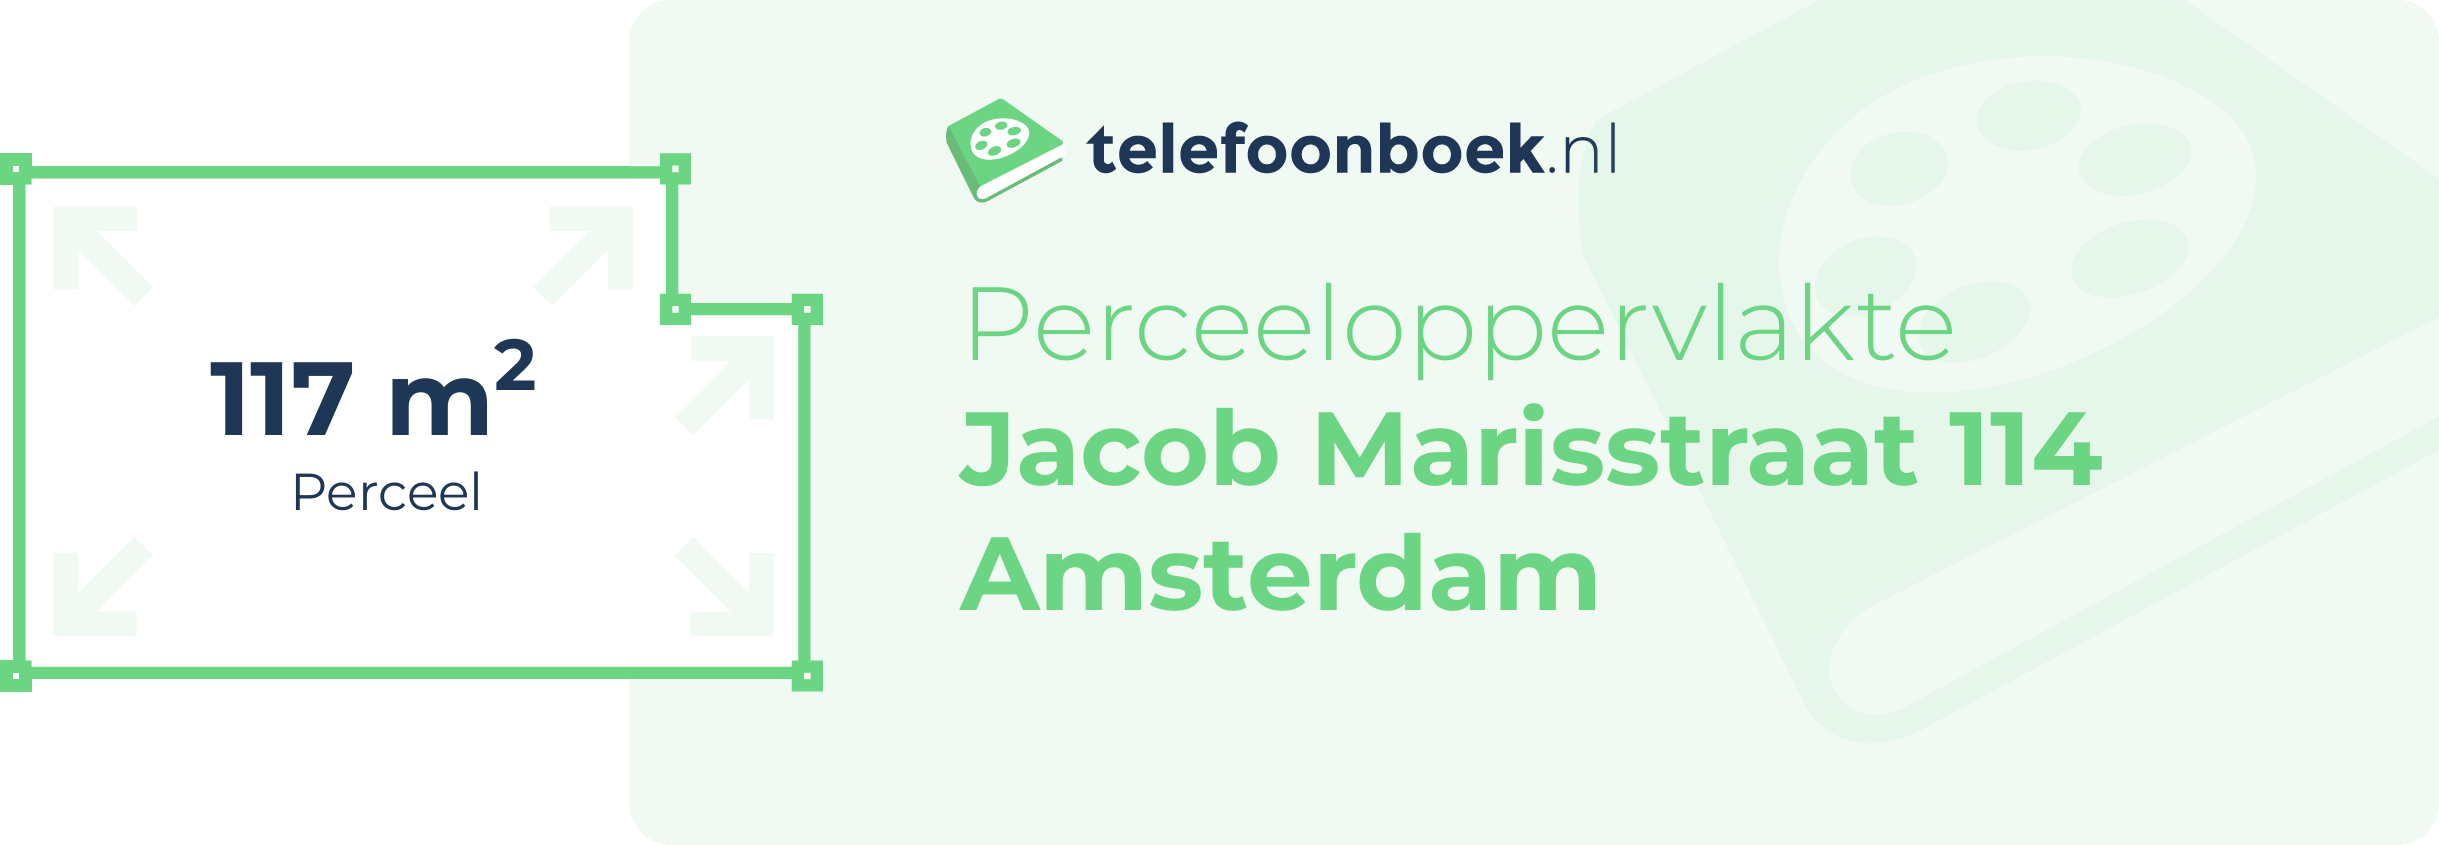 Perceeloppervlakte Jacob Marisstraat 114 Amsterdam